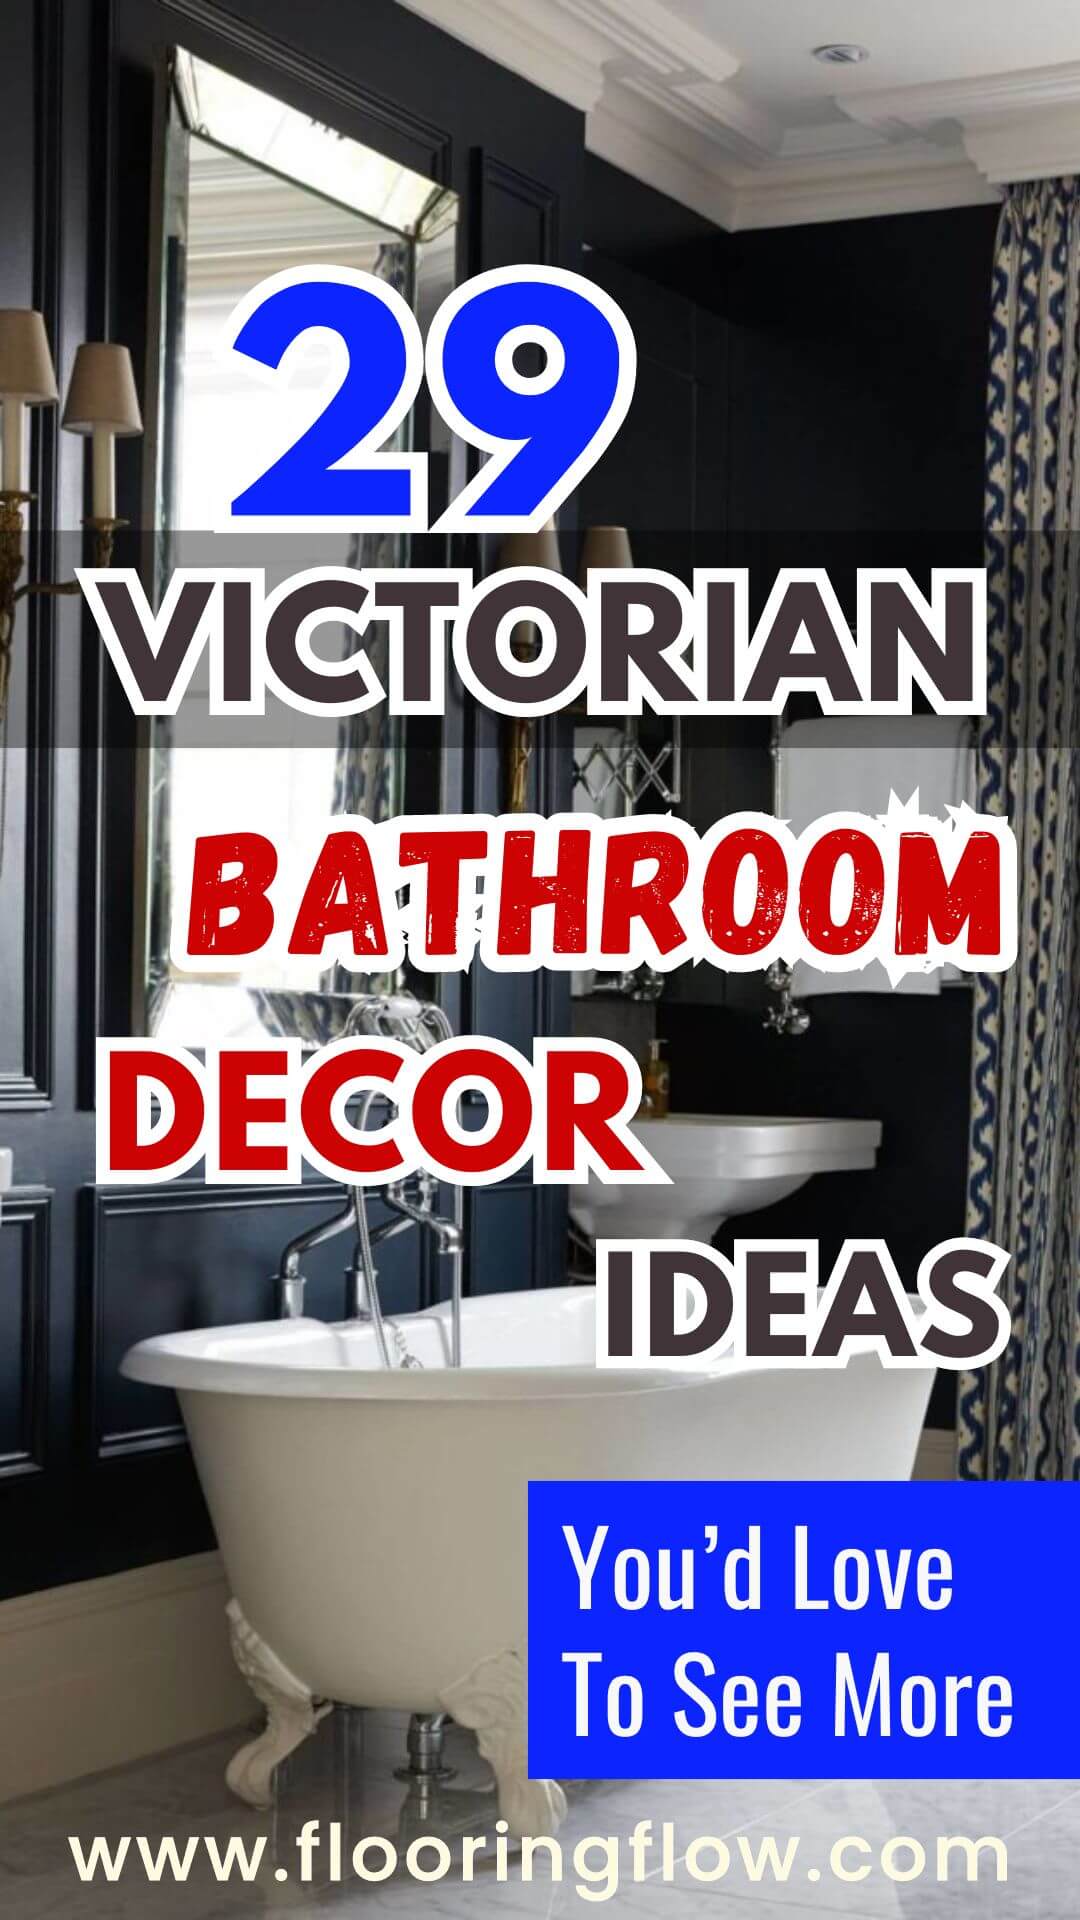 Victorian Bathroom Decor Ideas